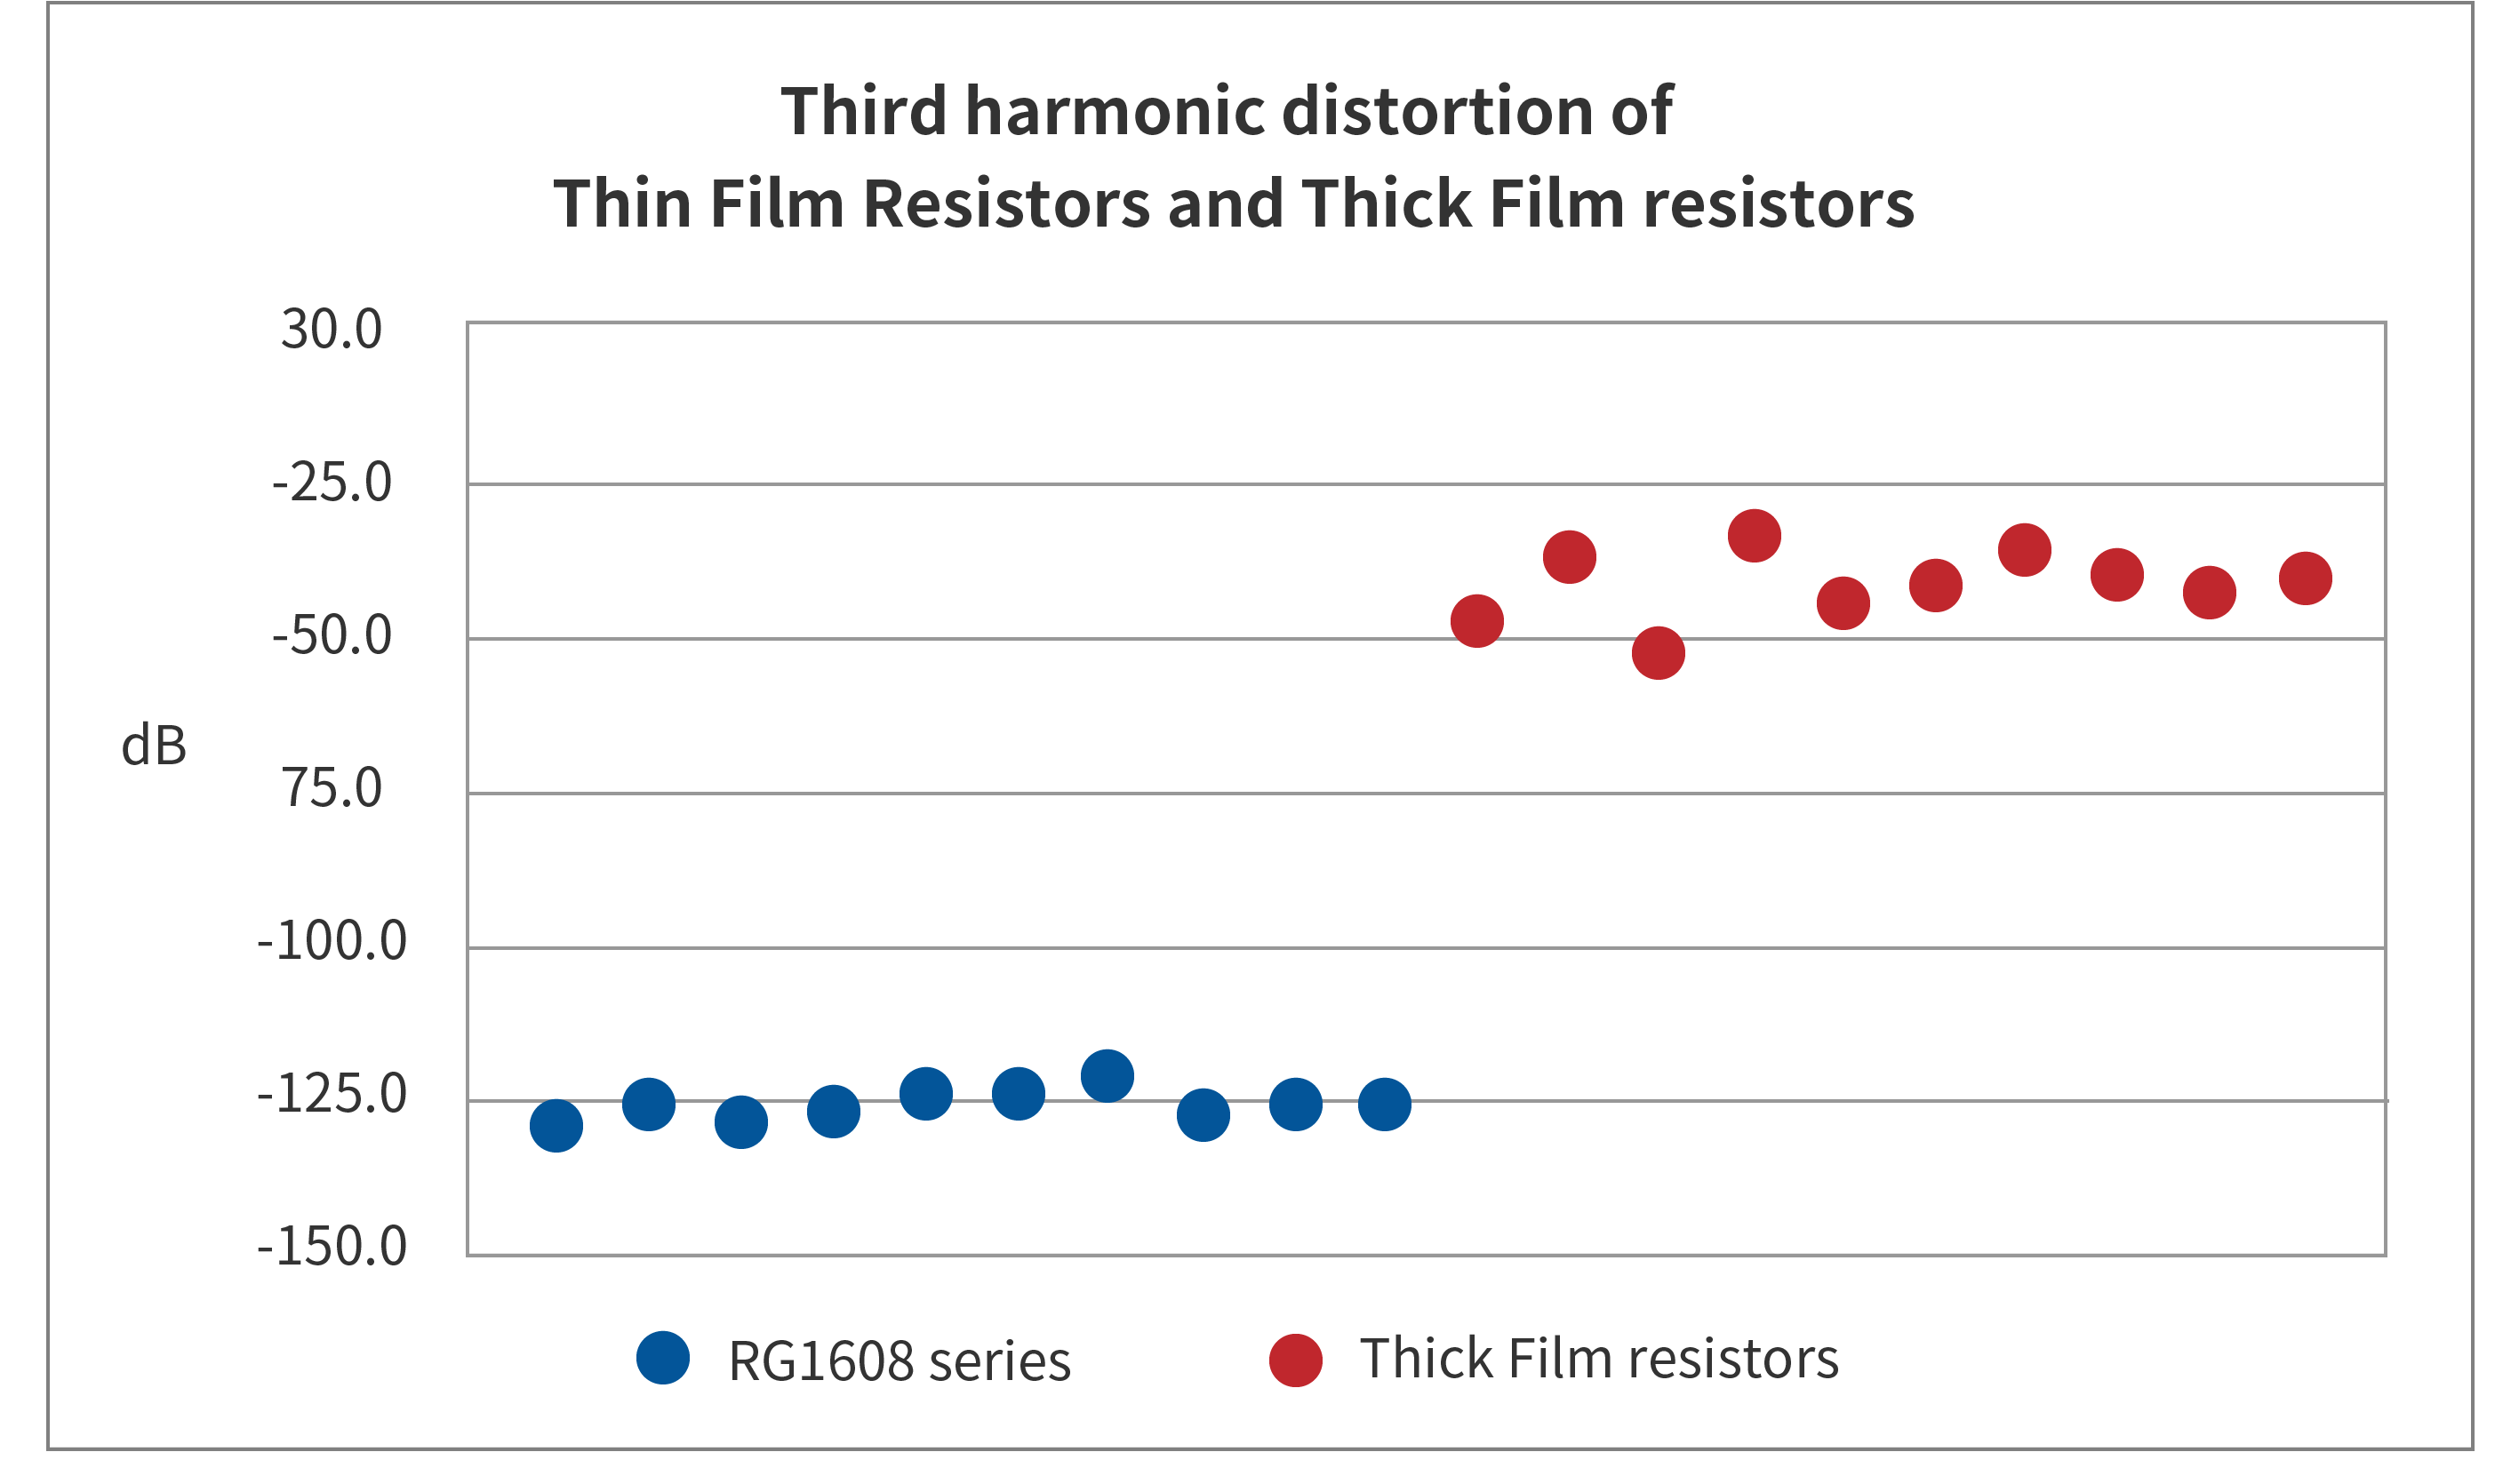 Third harmonic distortion of Thin Film Resistors and Thick Film resistors